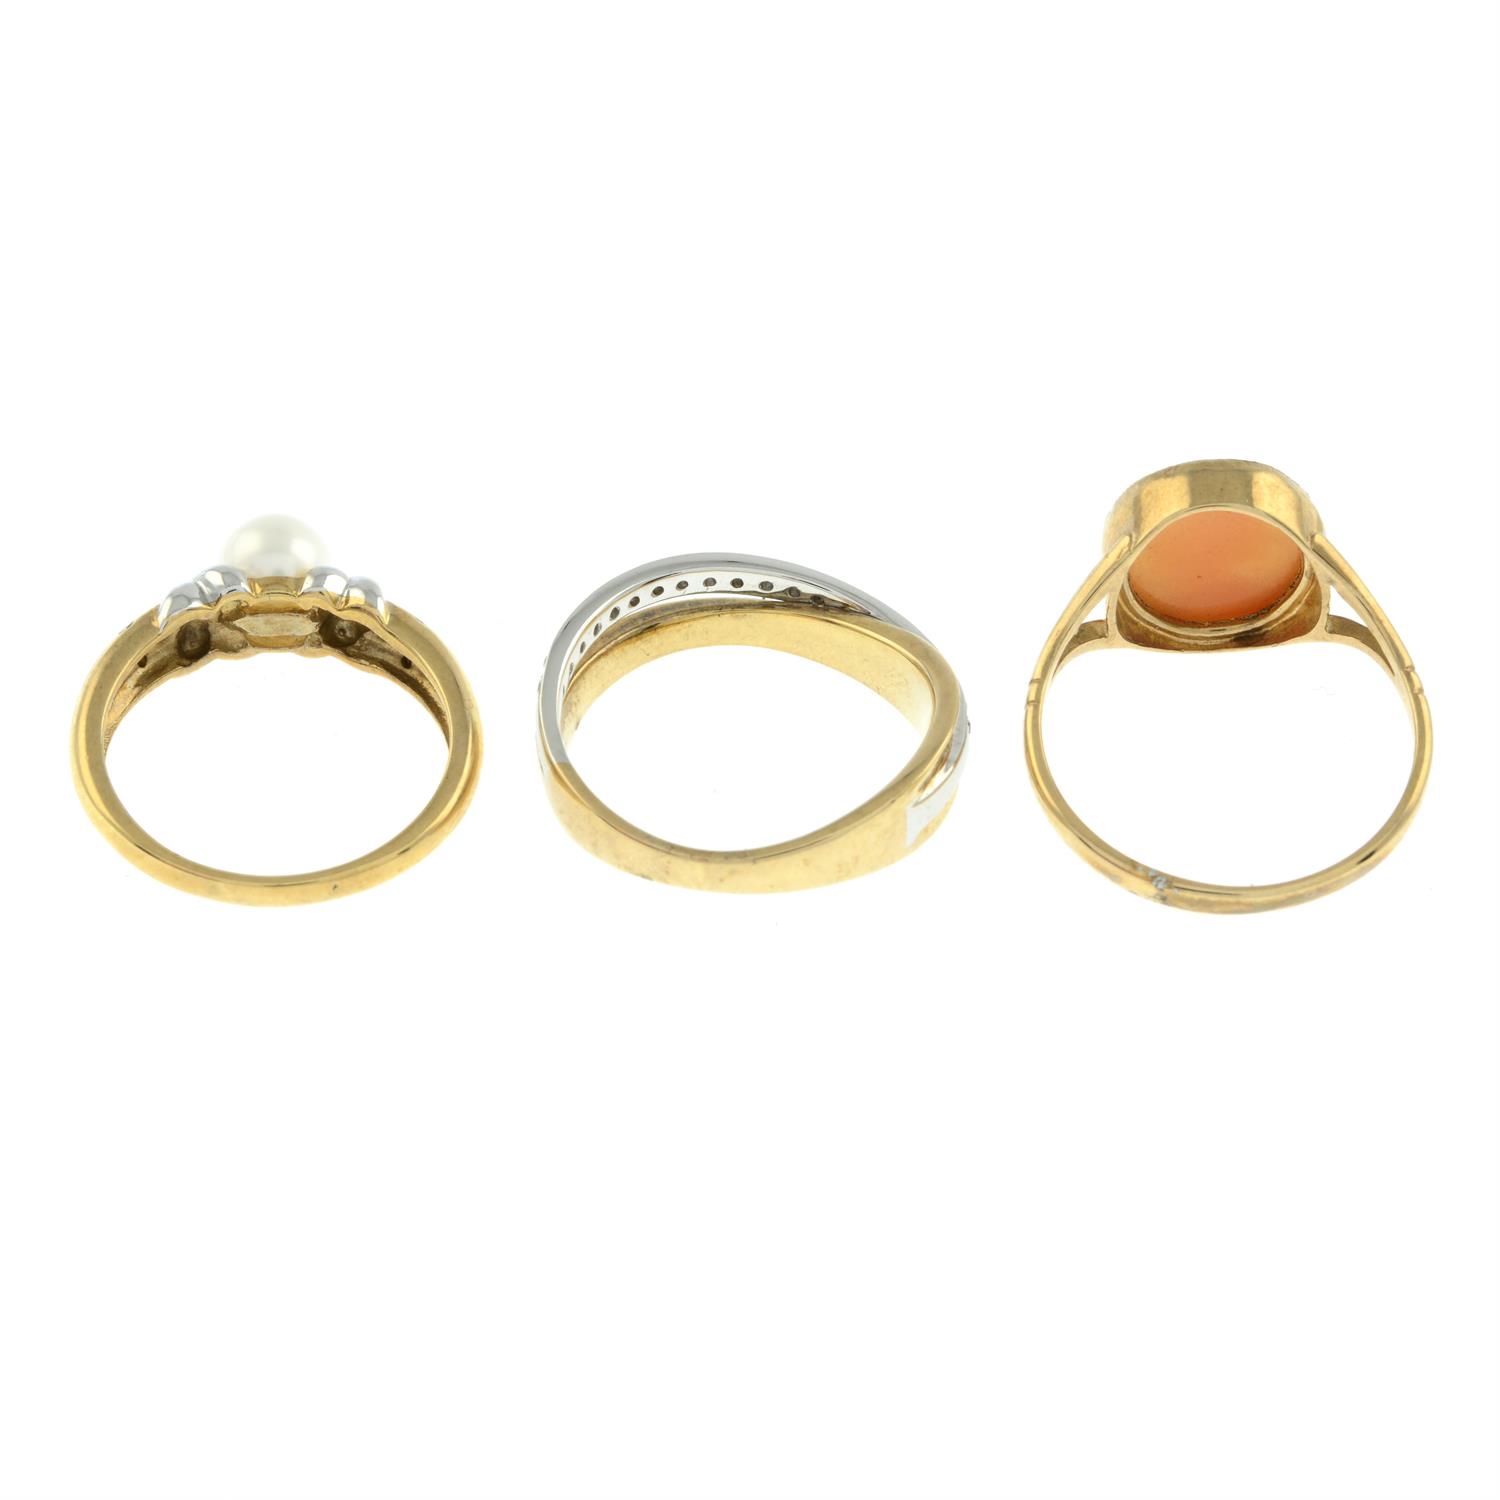 Three 9ct gold gem-set rings - Image 2 of 2